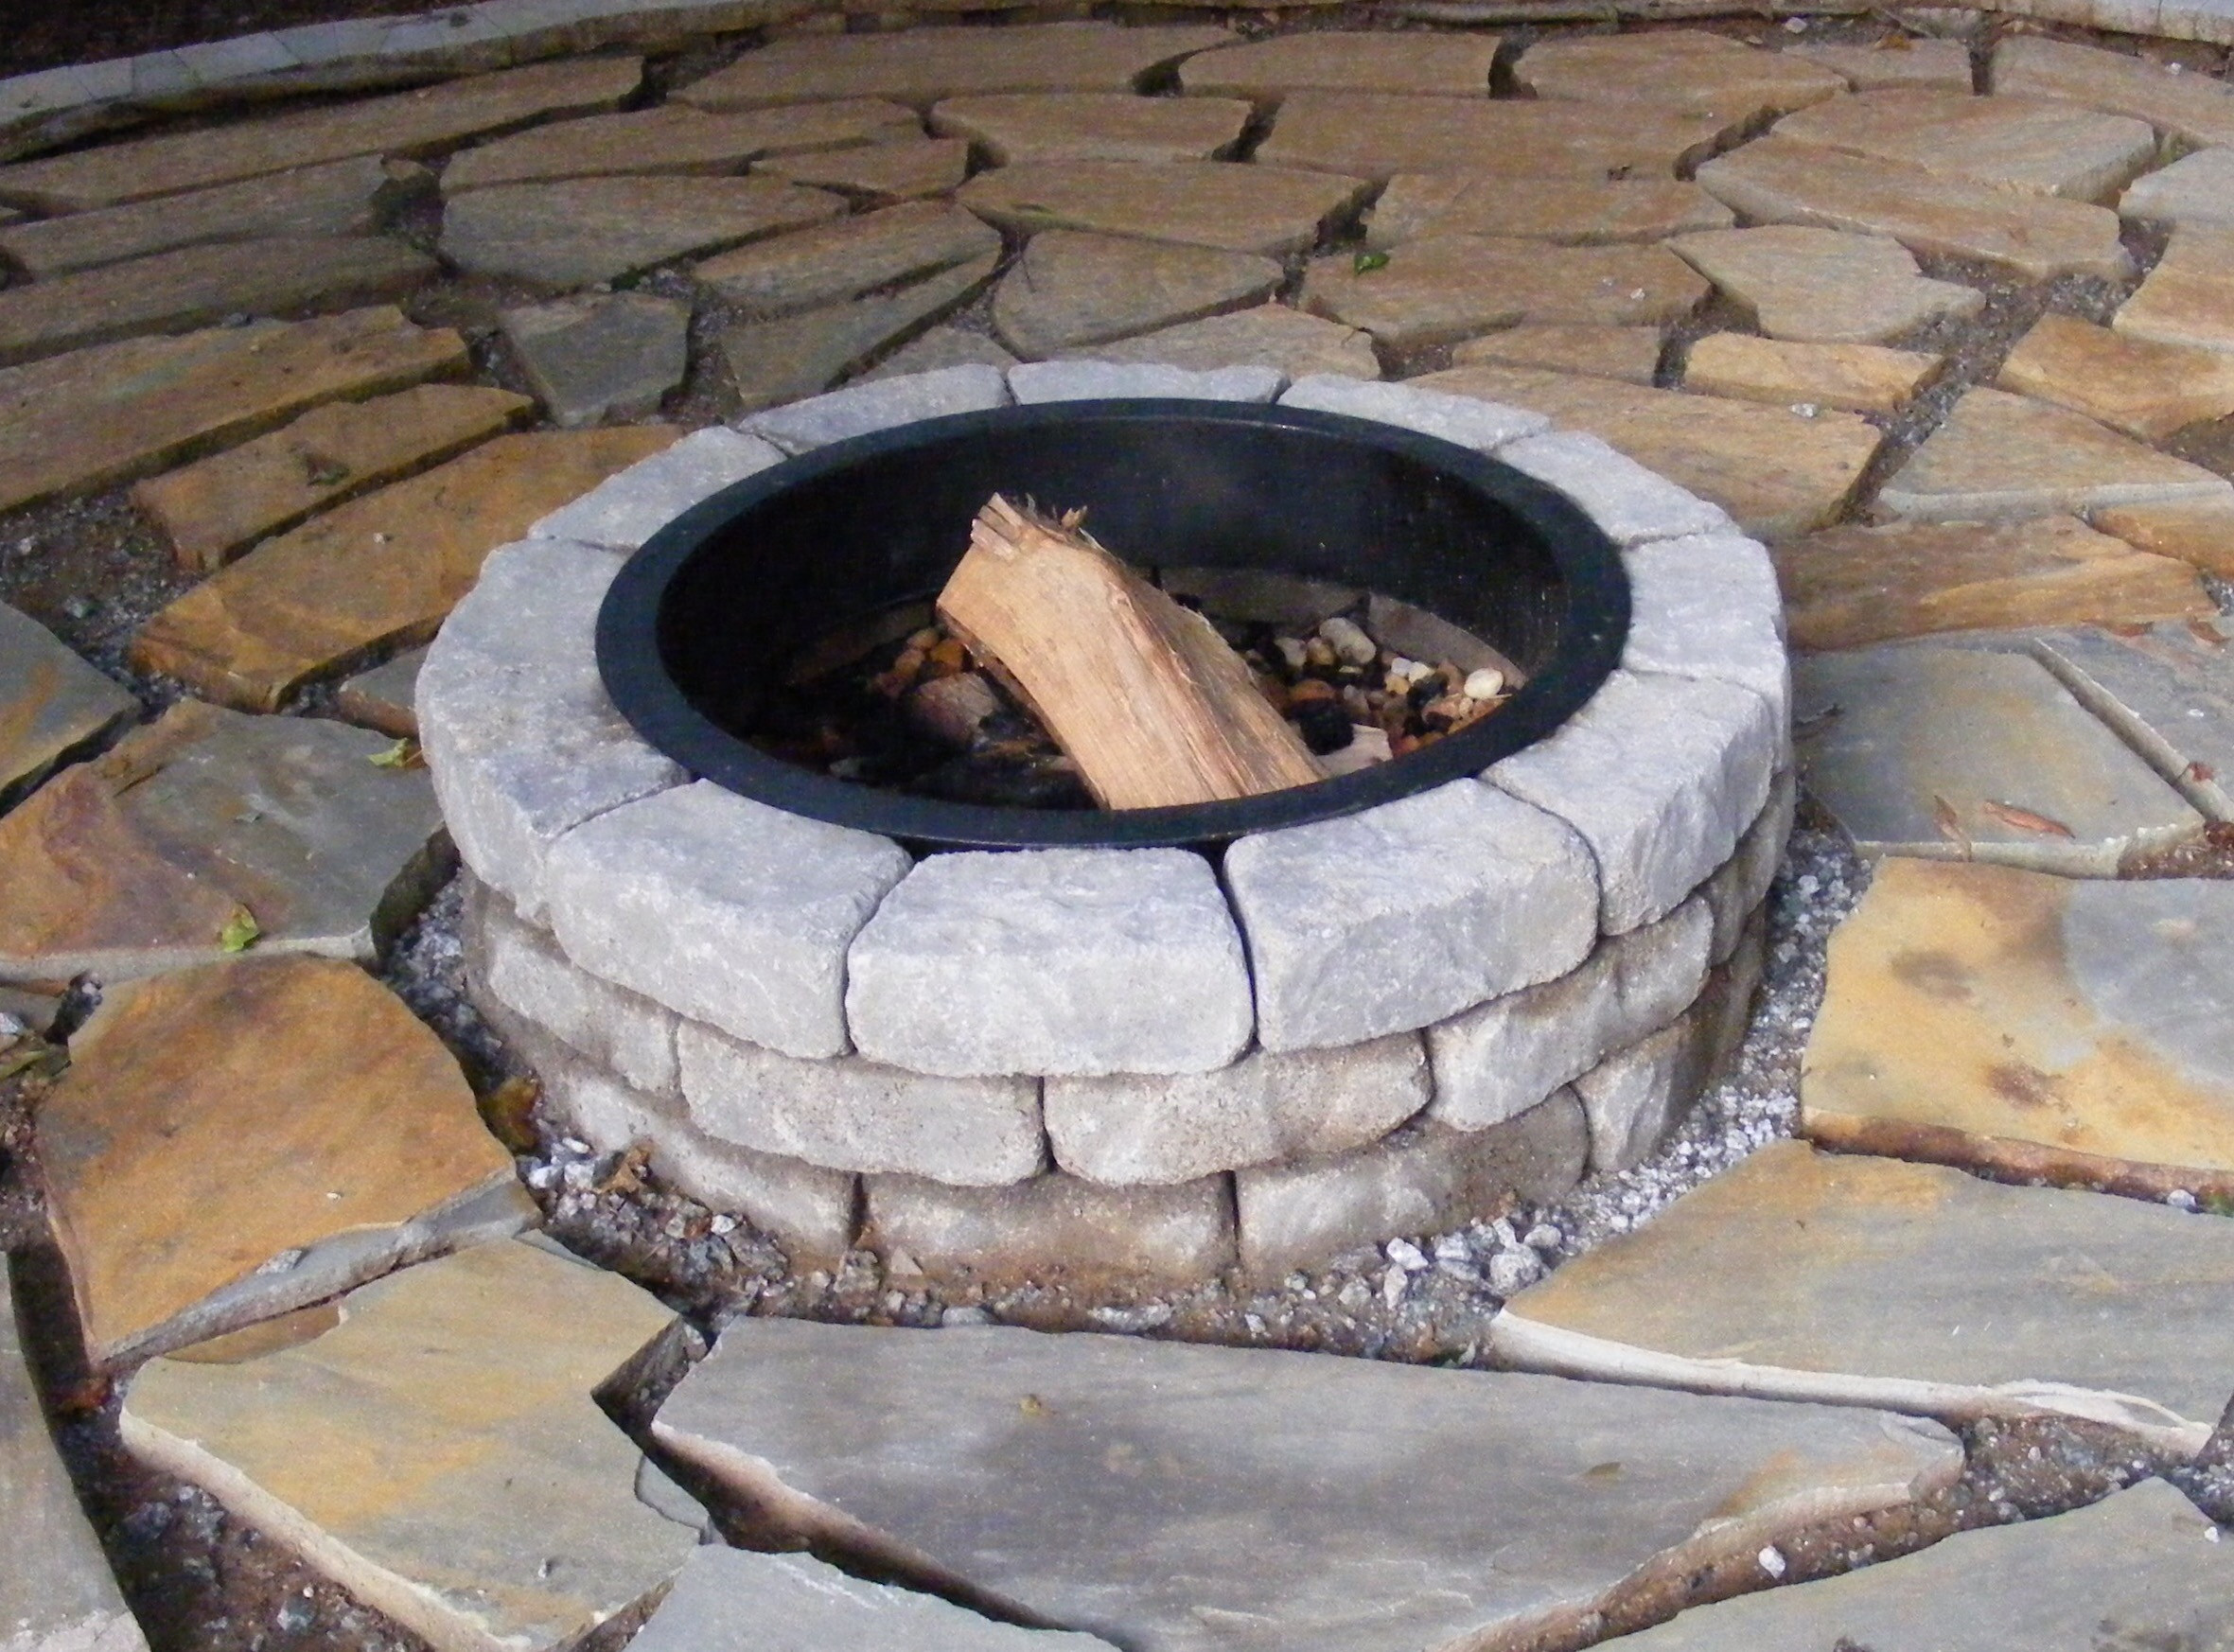 Best ideas about DIY Bonfire Pit
. Save or Pin DIY Fire Pit Now.